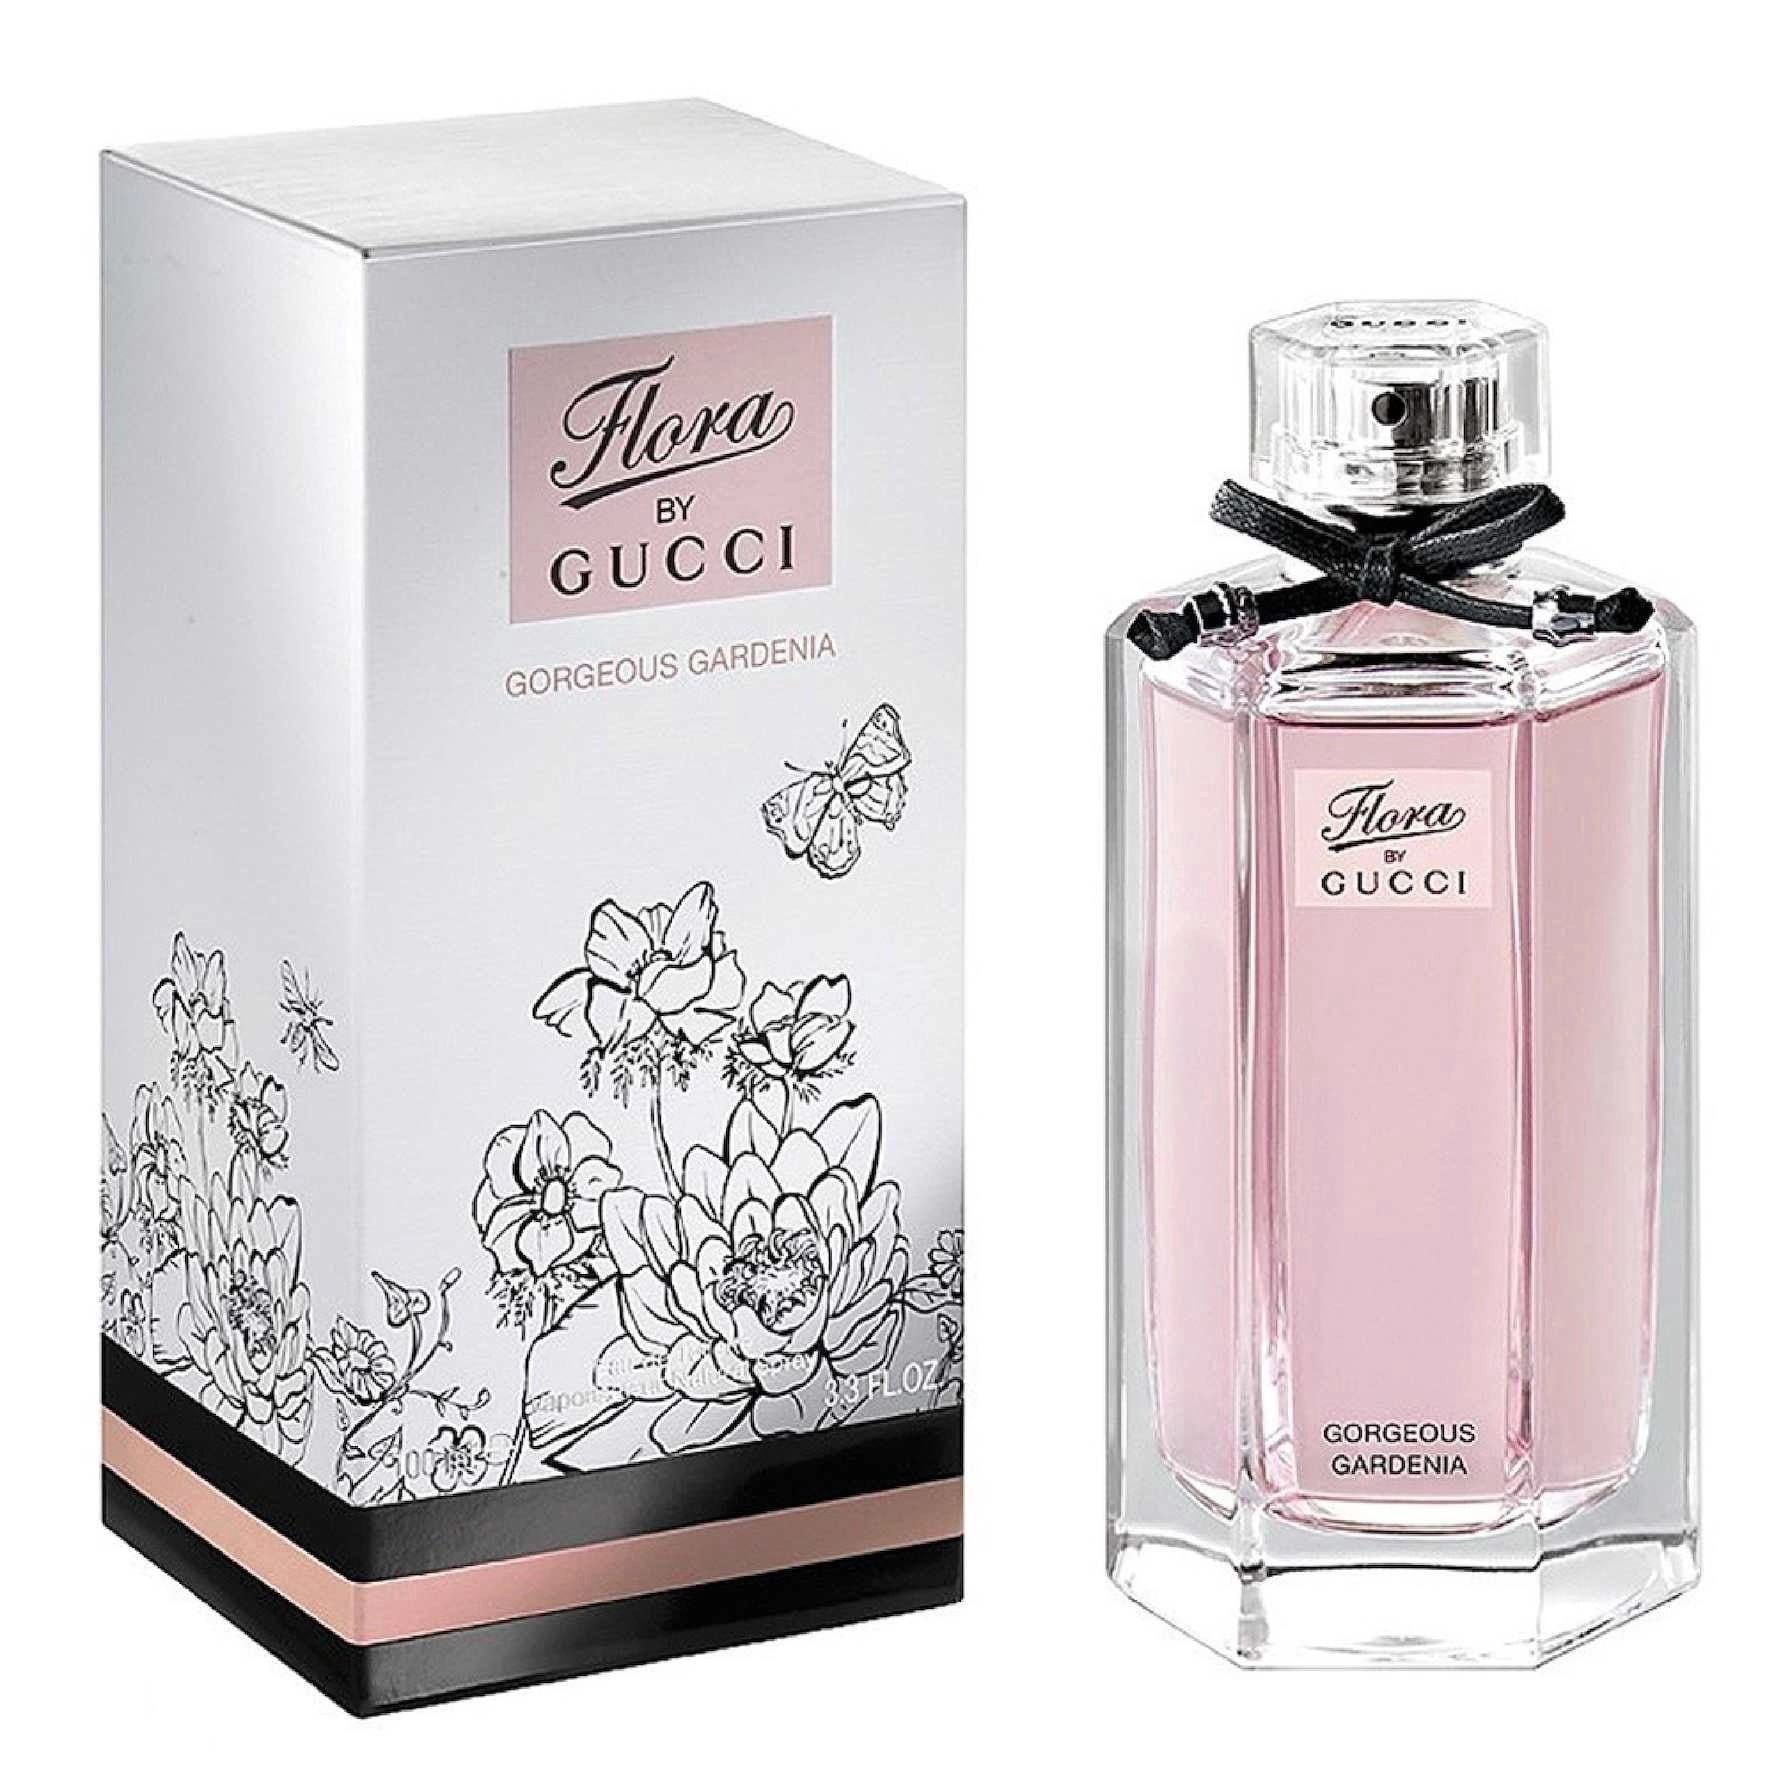 Gucci Flora by Gucci gorgeous gardenia EDT, 100 ml